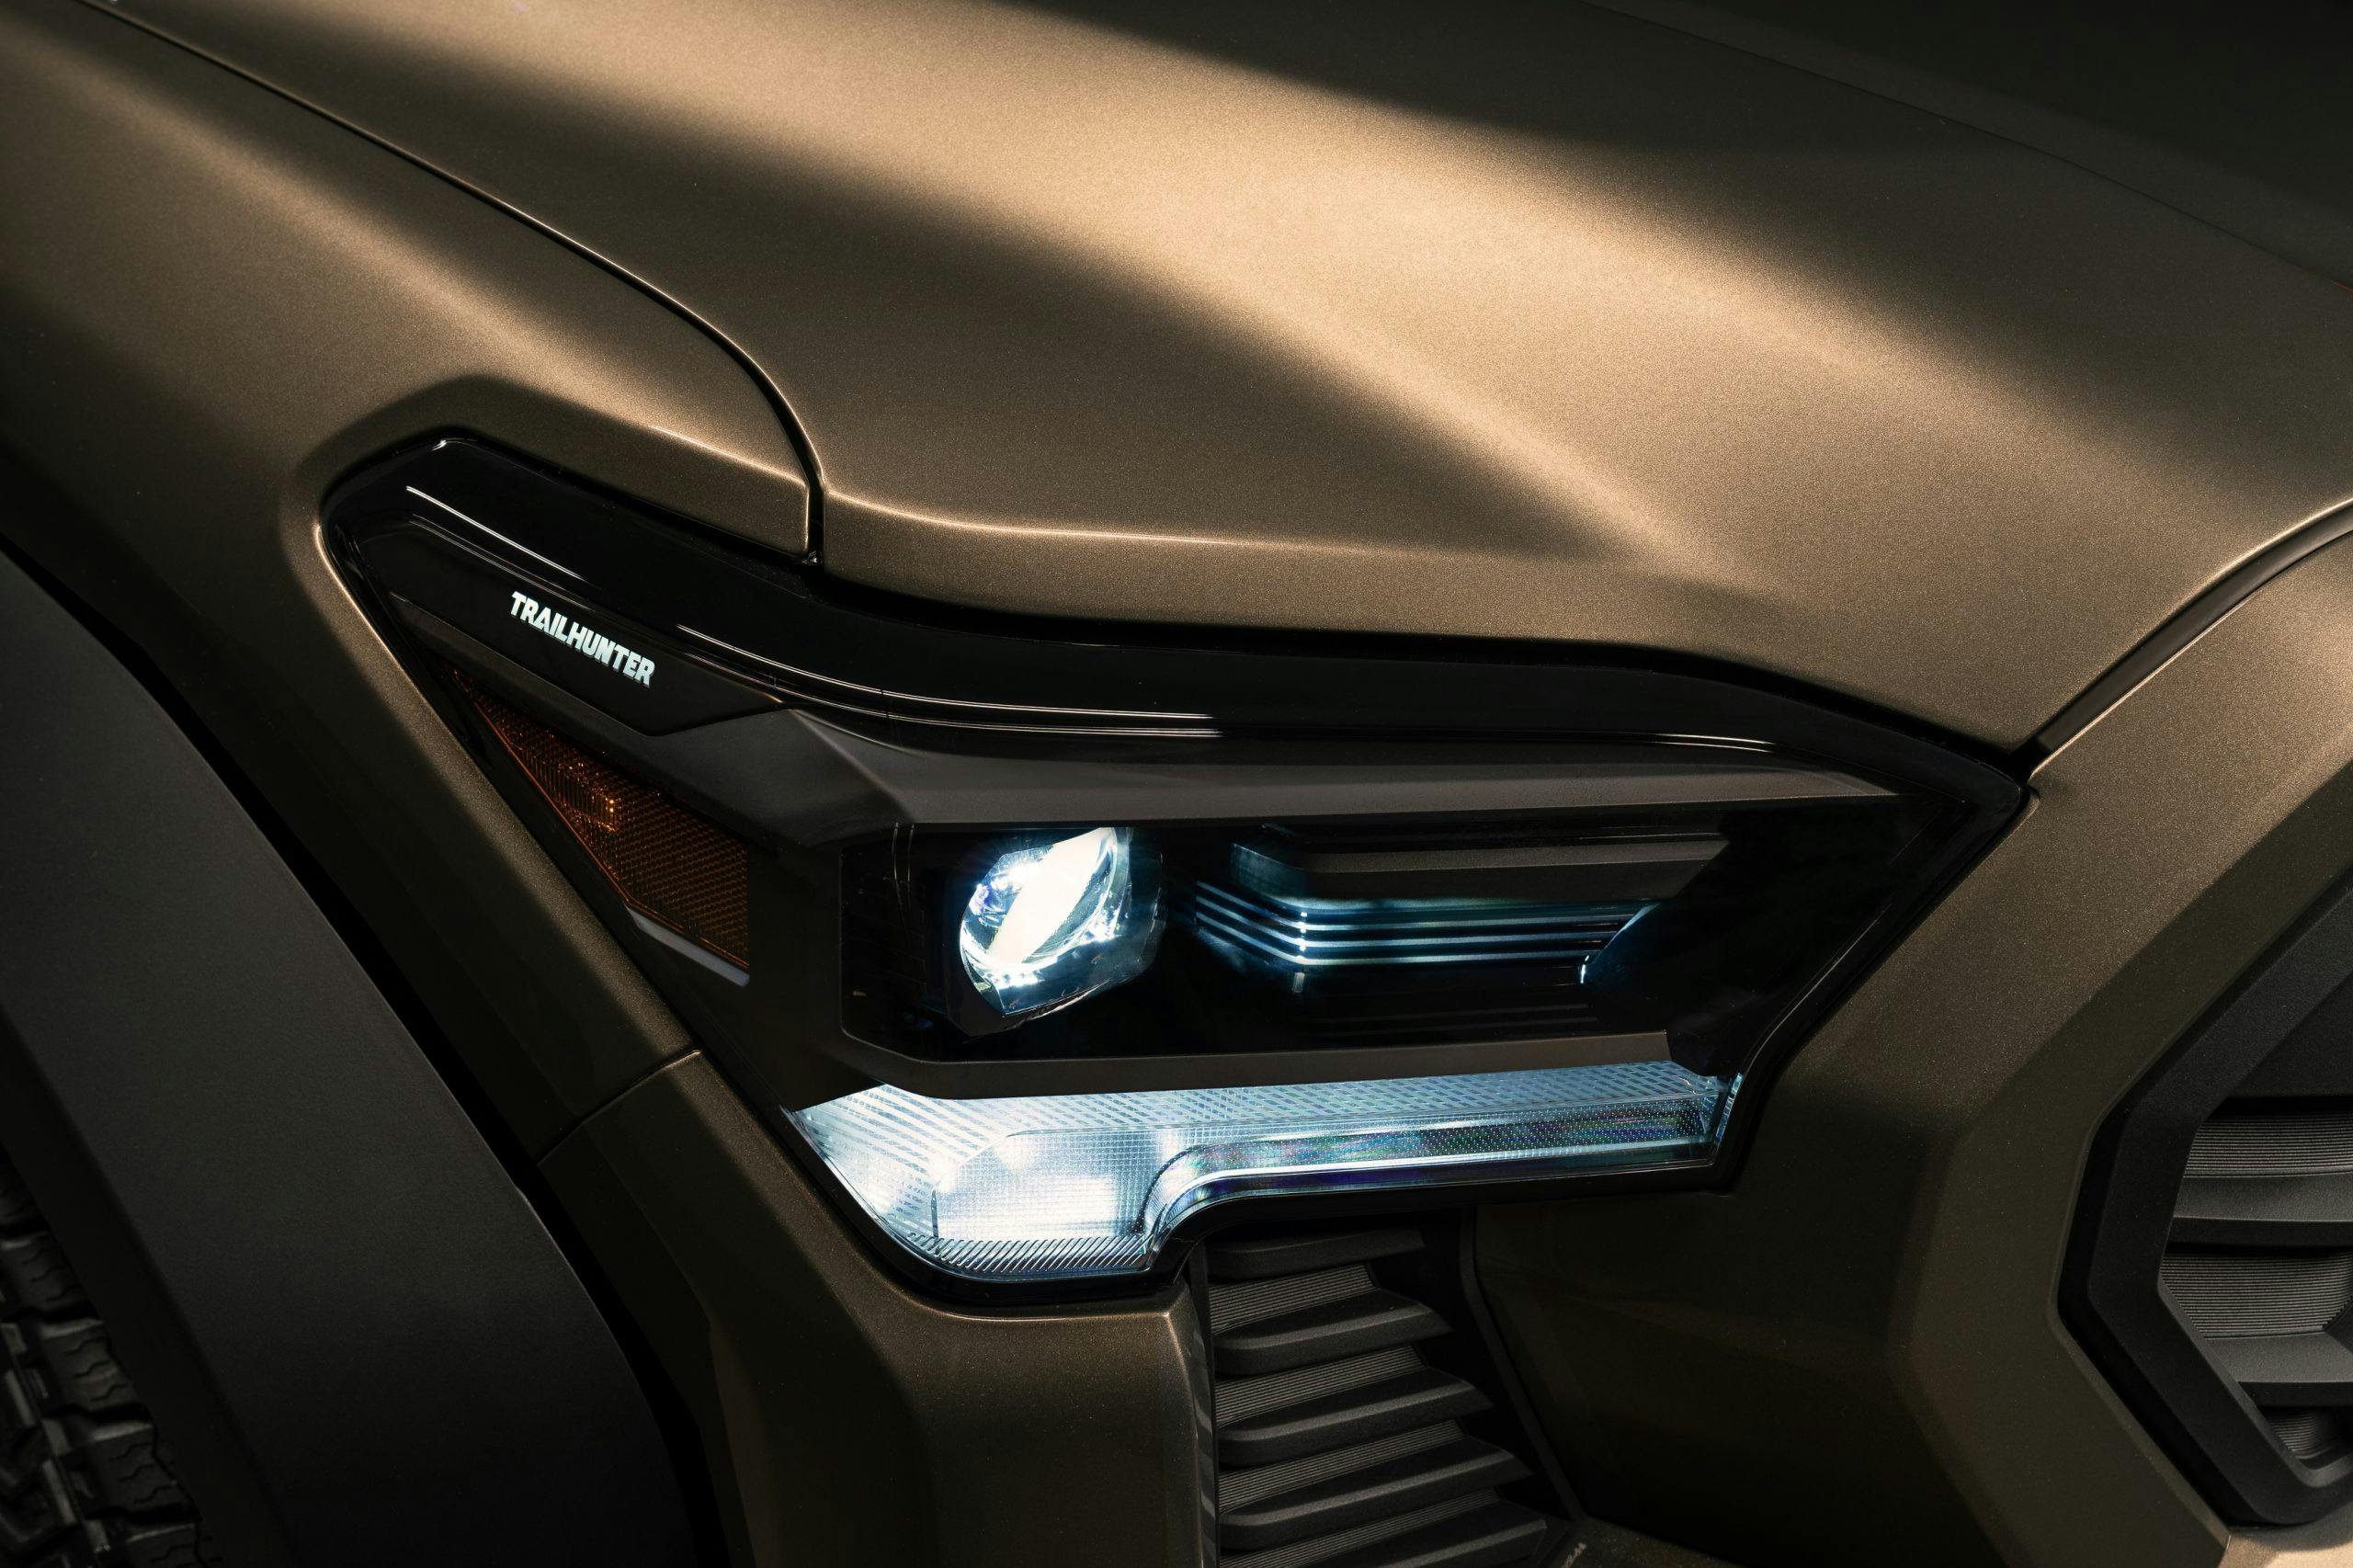 2024 Toyota Tacoma Trailhunter teaser headlight detail